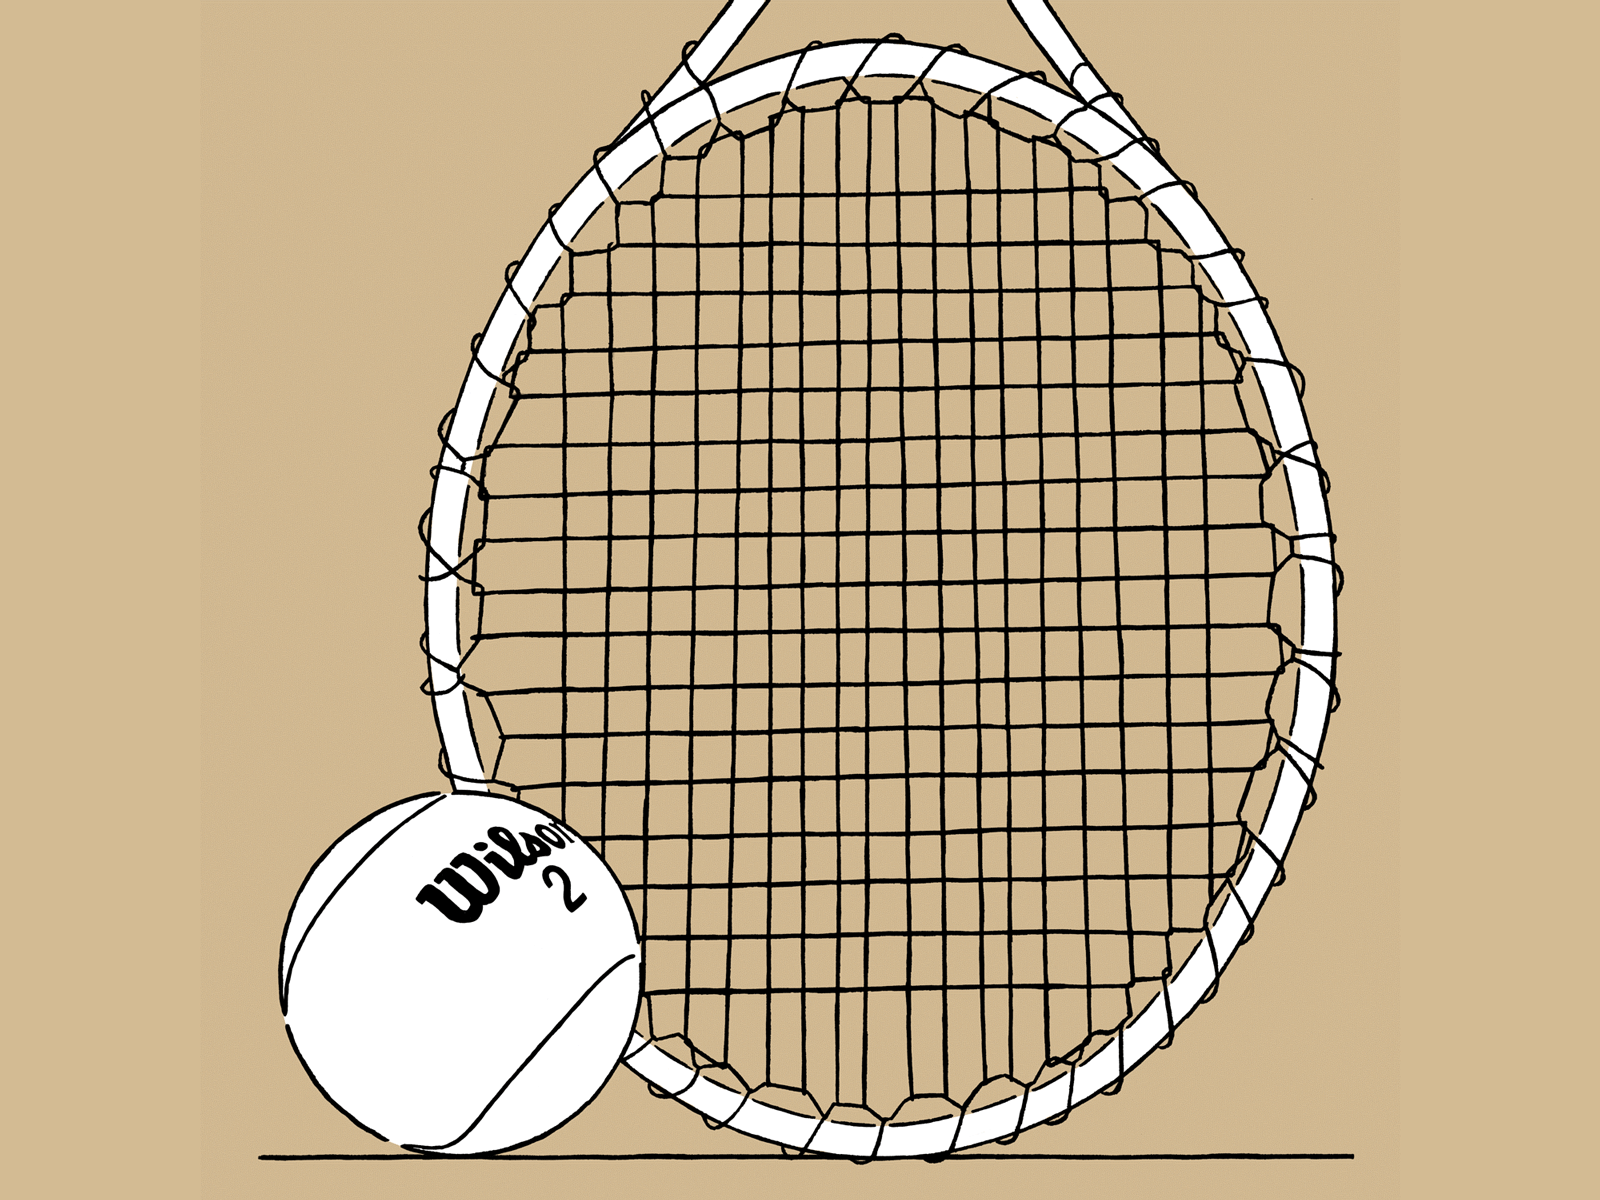 Wilson T2000 animation flat flat illustration gif illustration lifestyle line art line drawing maykang minimal sports t2000 t2000 tennis tennis ball tennis racket wilson